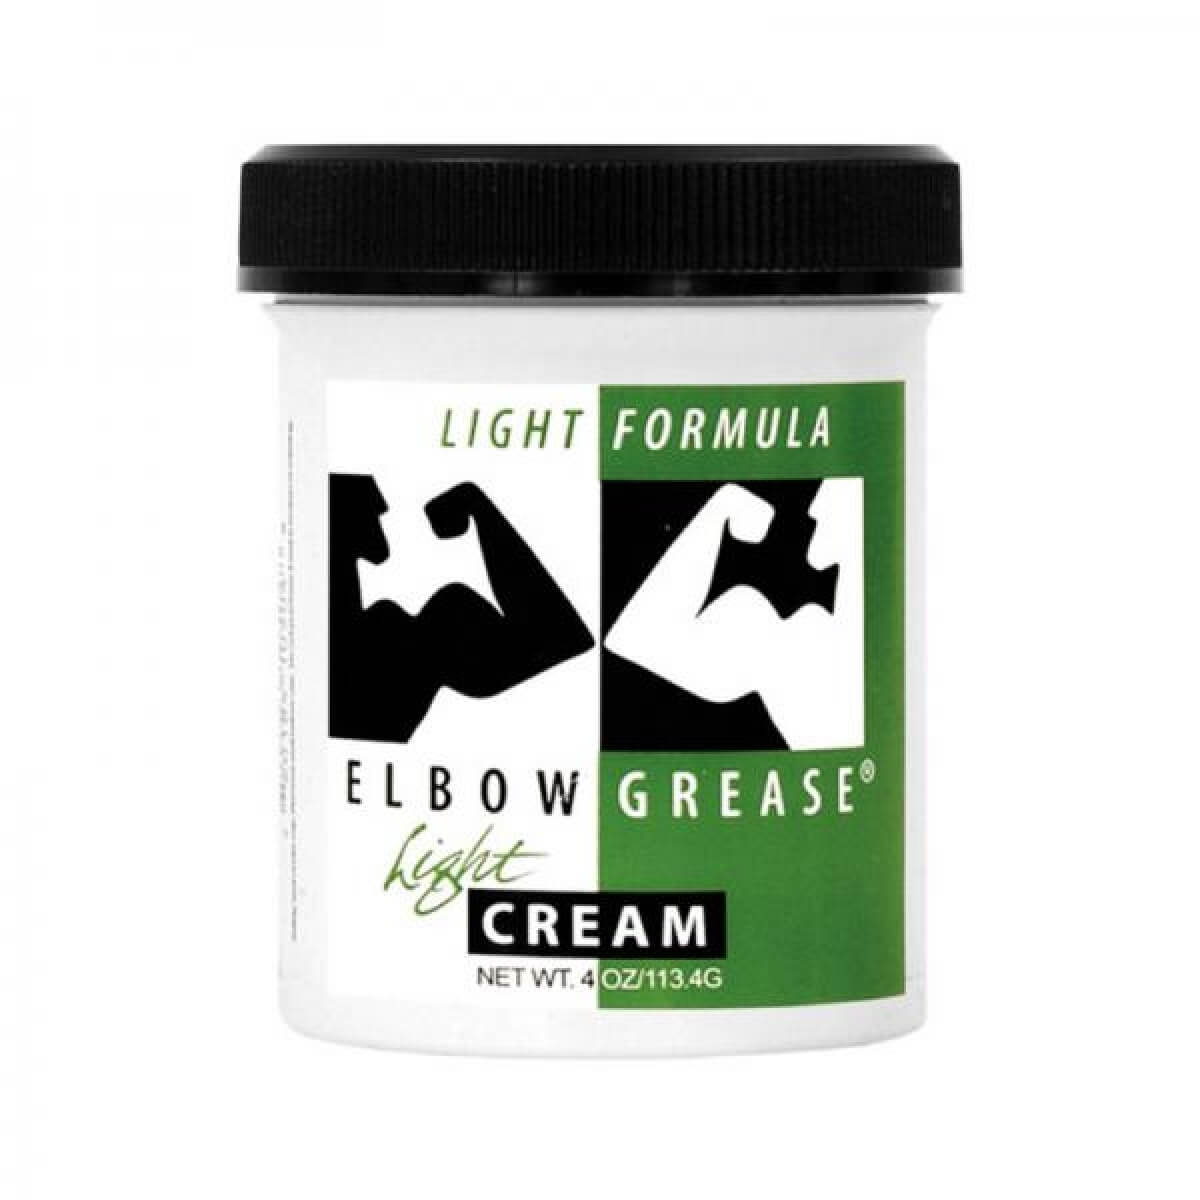 Buy masturbation cream online like Elbow Grease Light from Condom Depot | Best online condom store